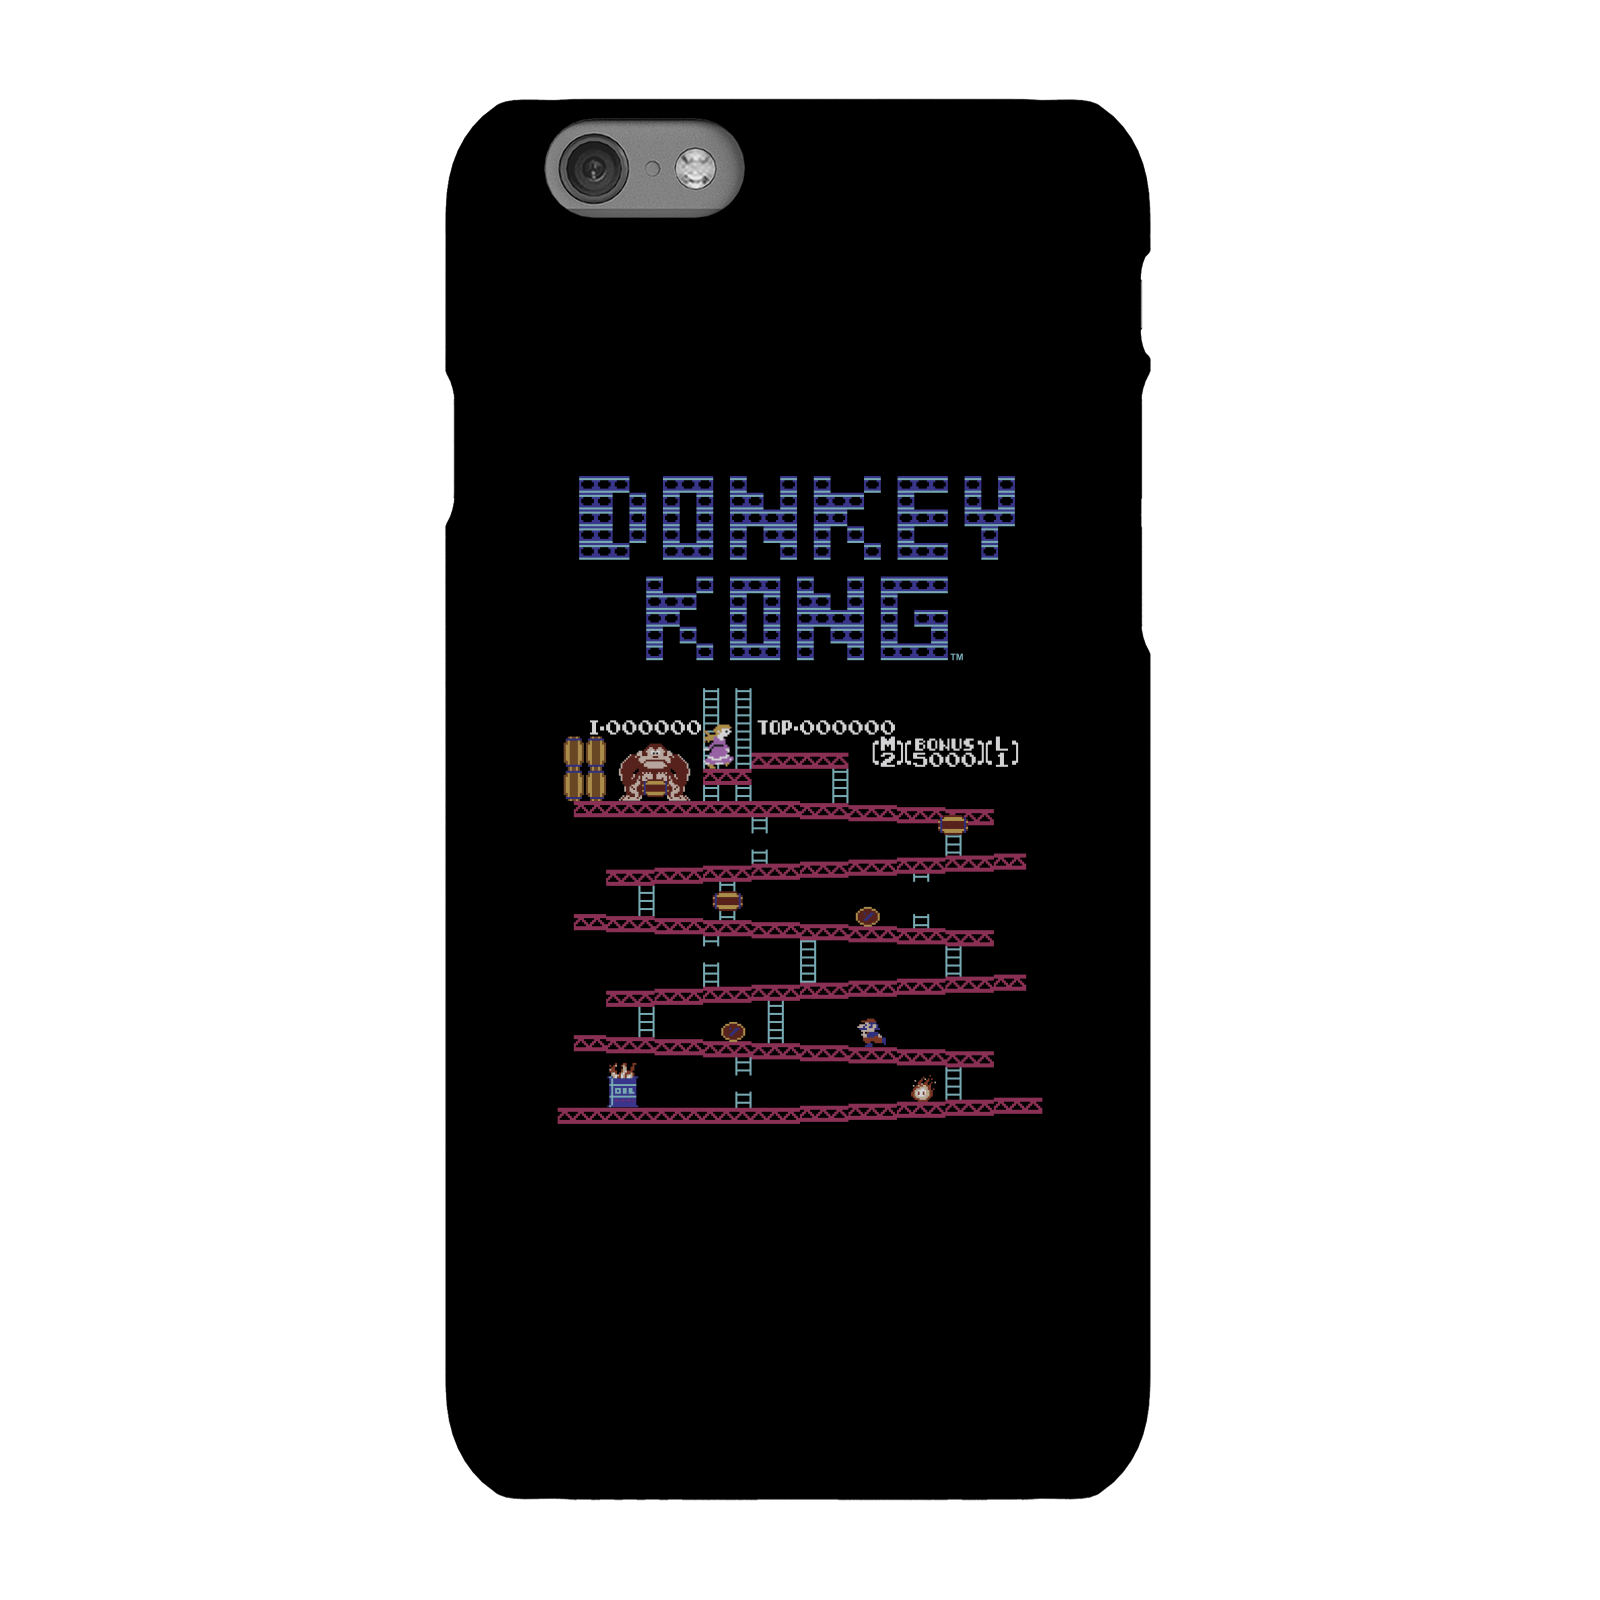 Nintendo Donkey Kong Retro Phone Case - iPhone 6S - Snap Case - Matte